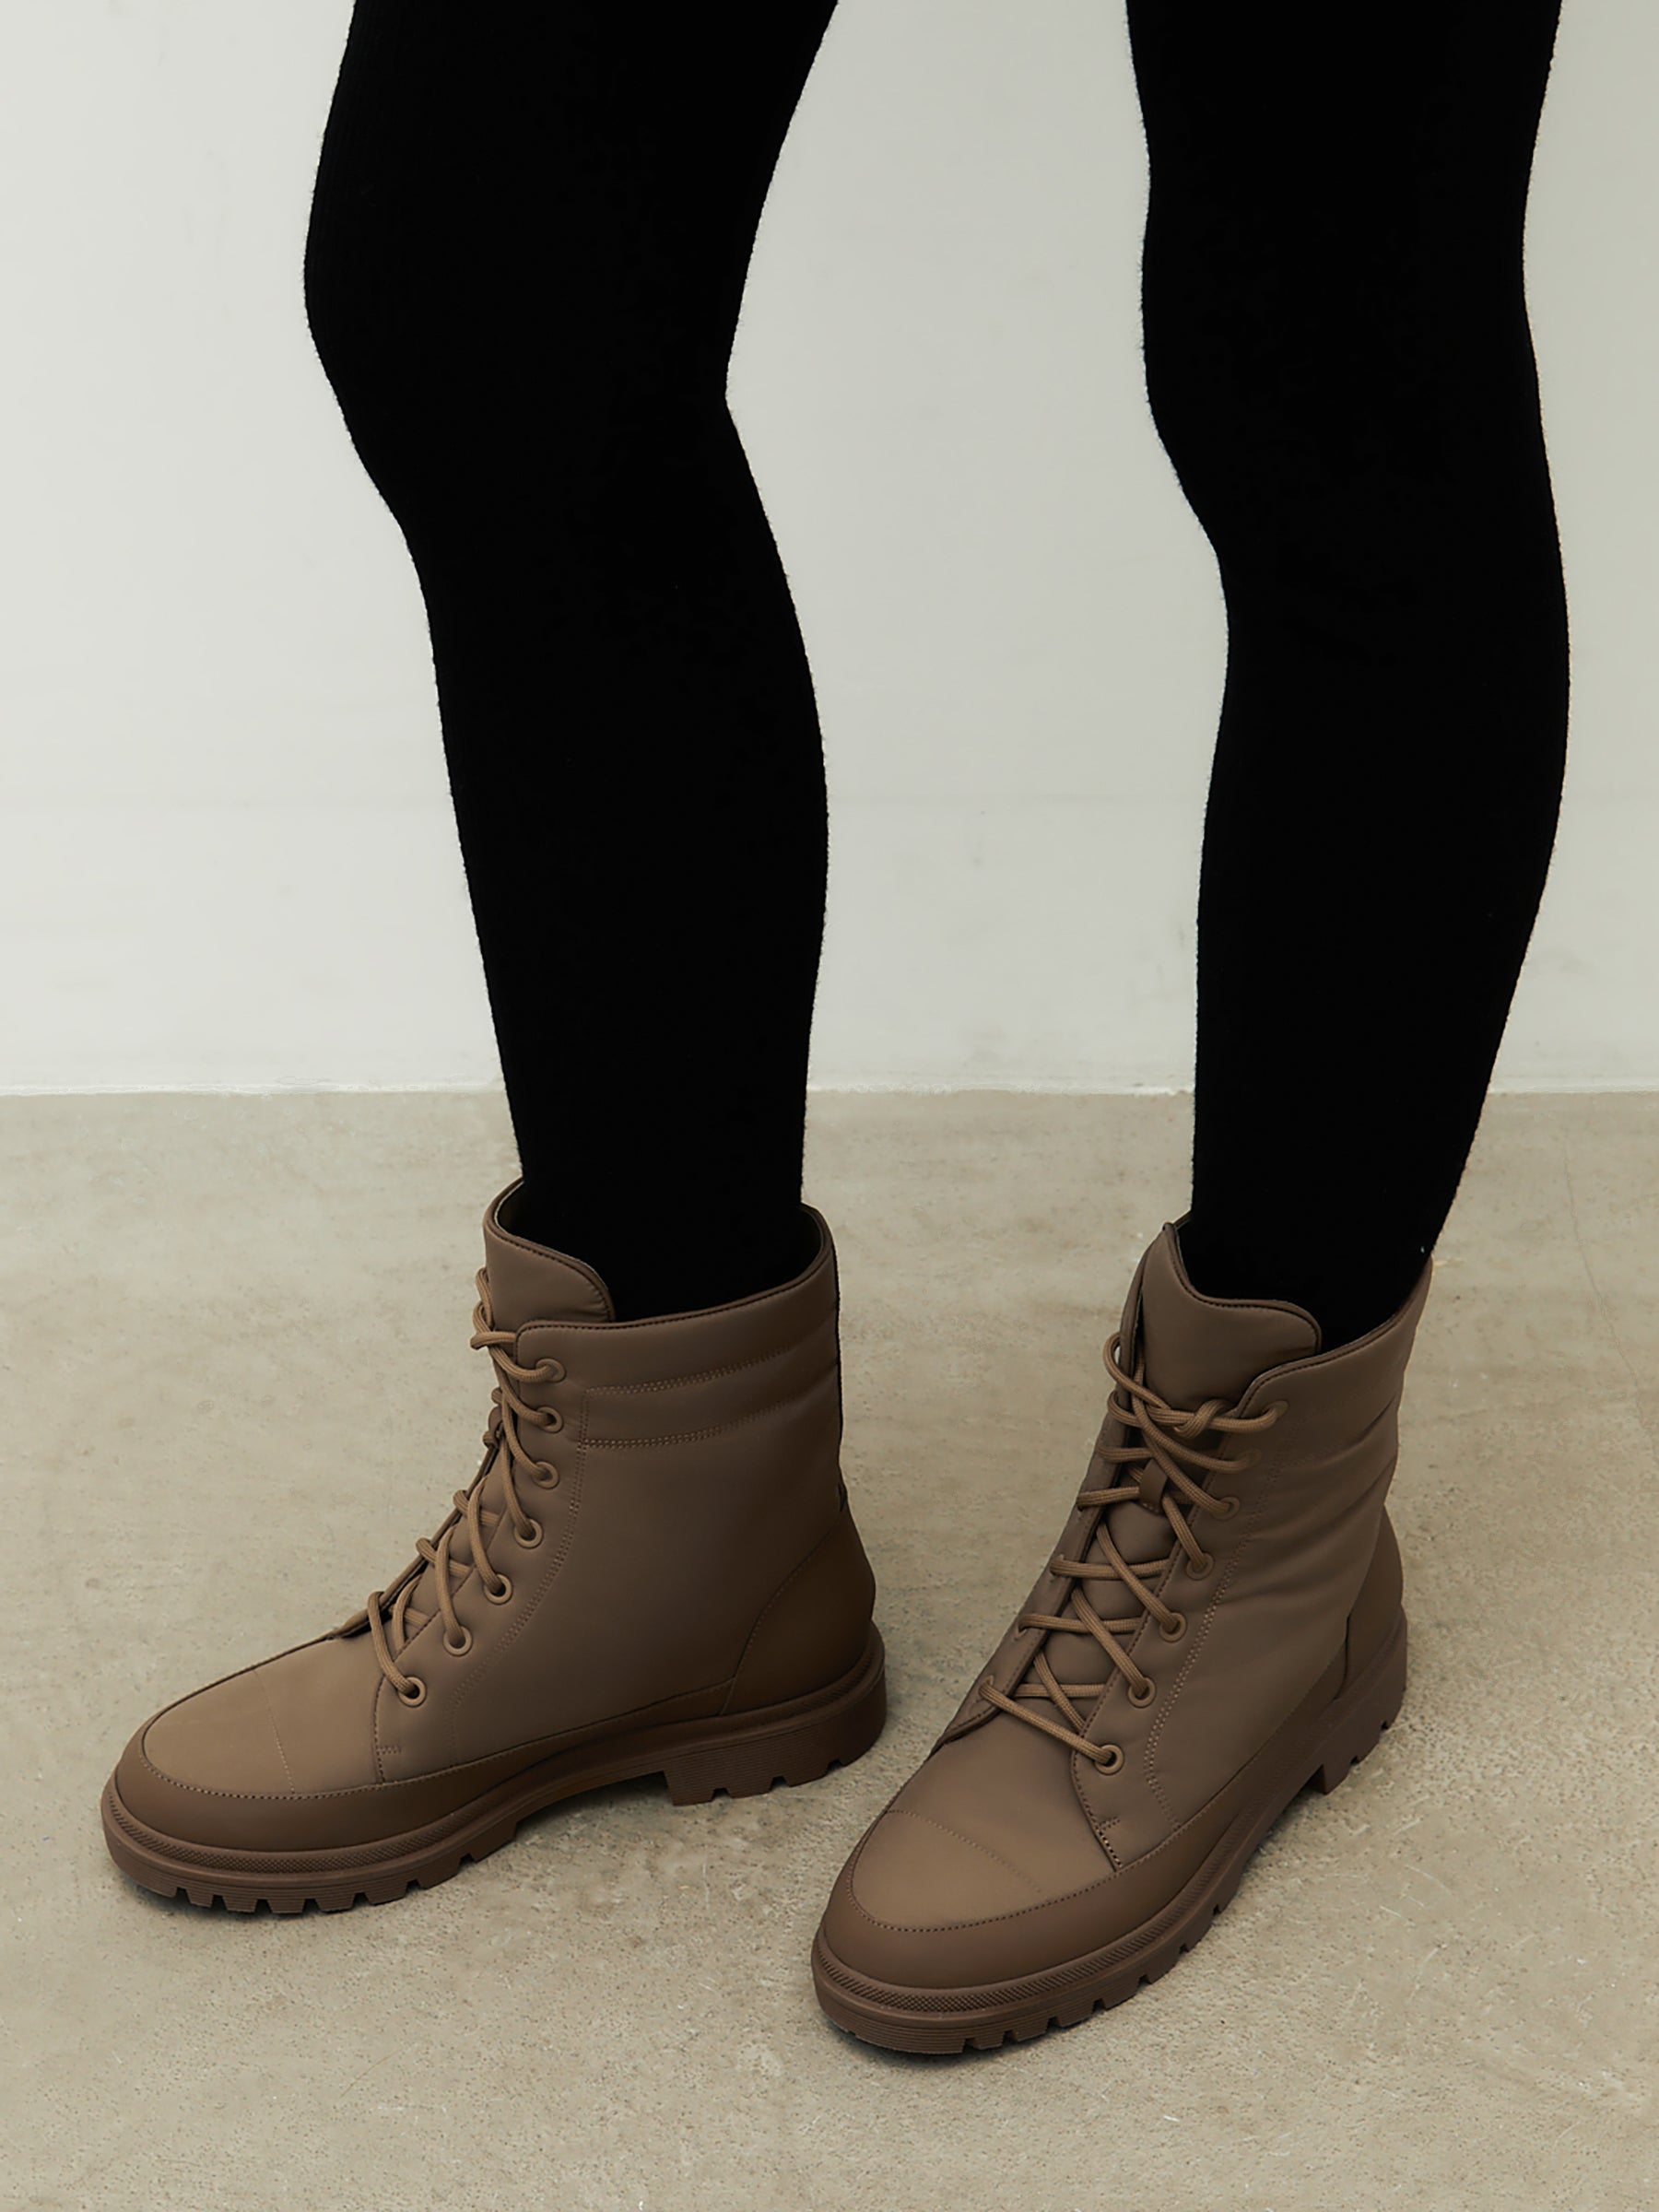 Nylon boots